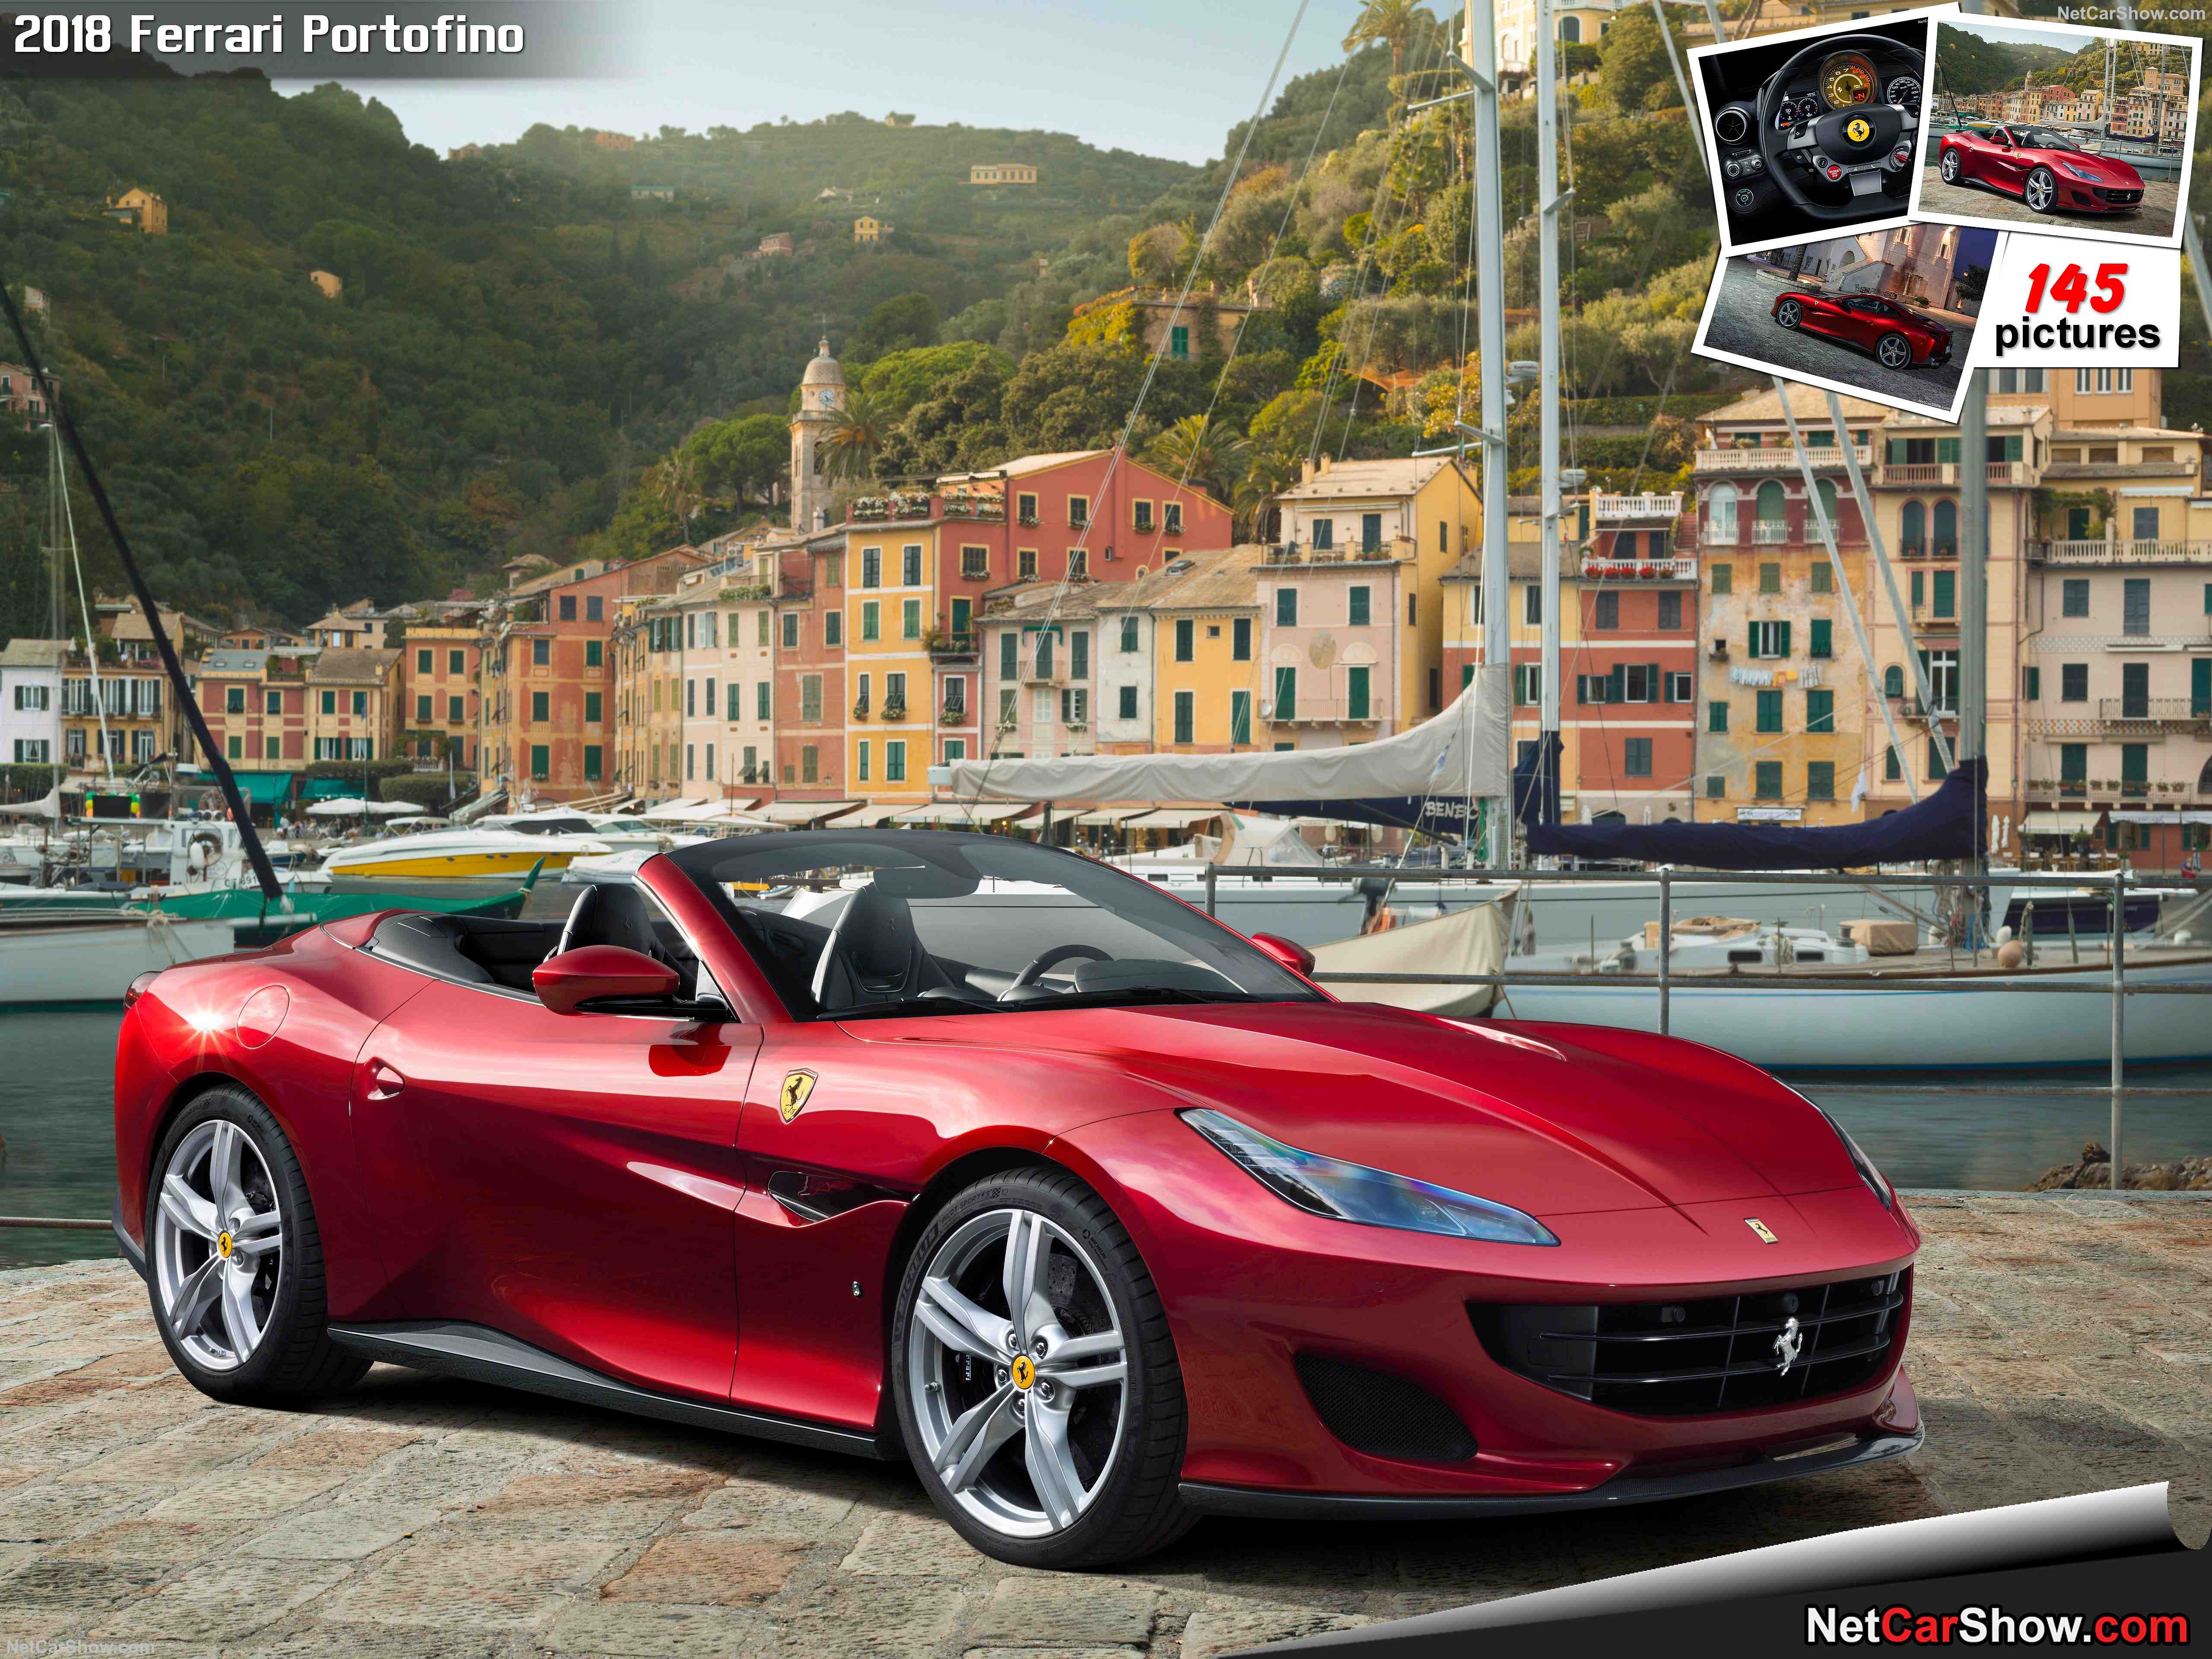 Ferrari Portofino interior model